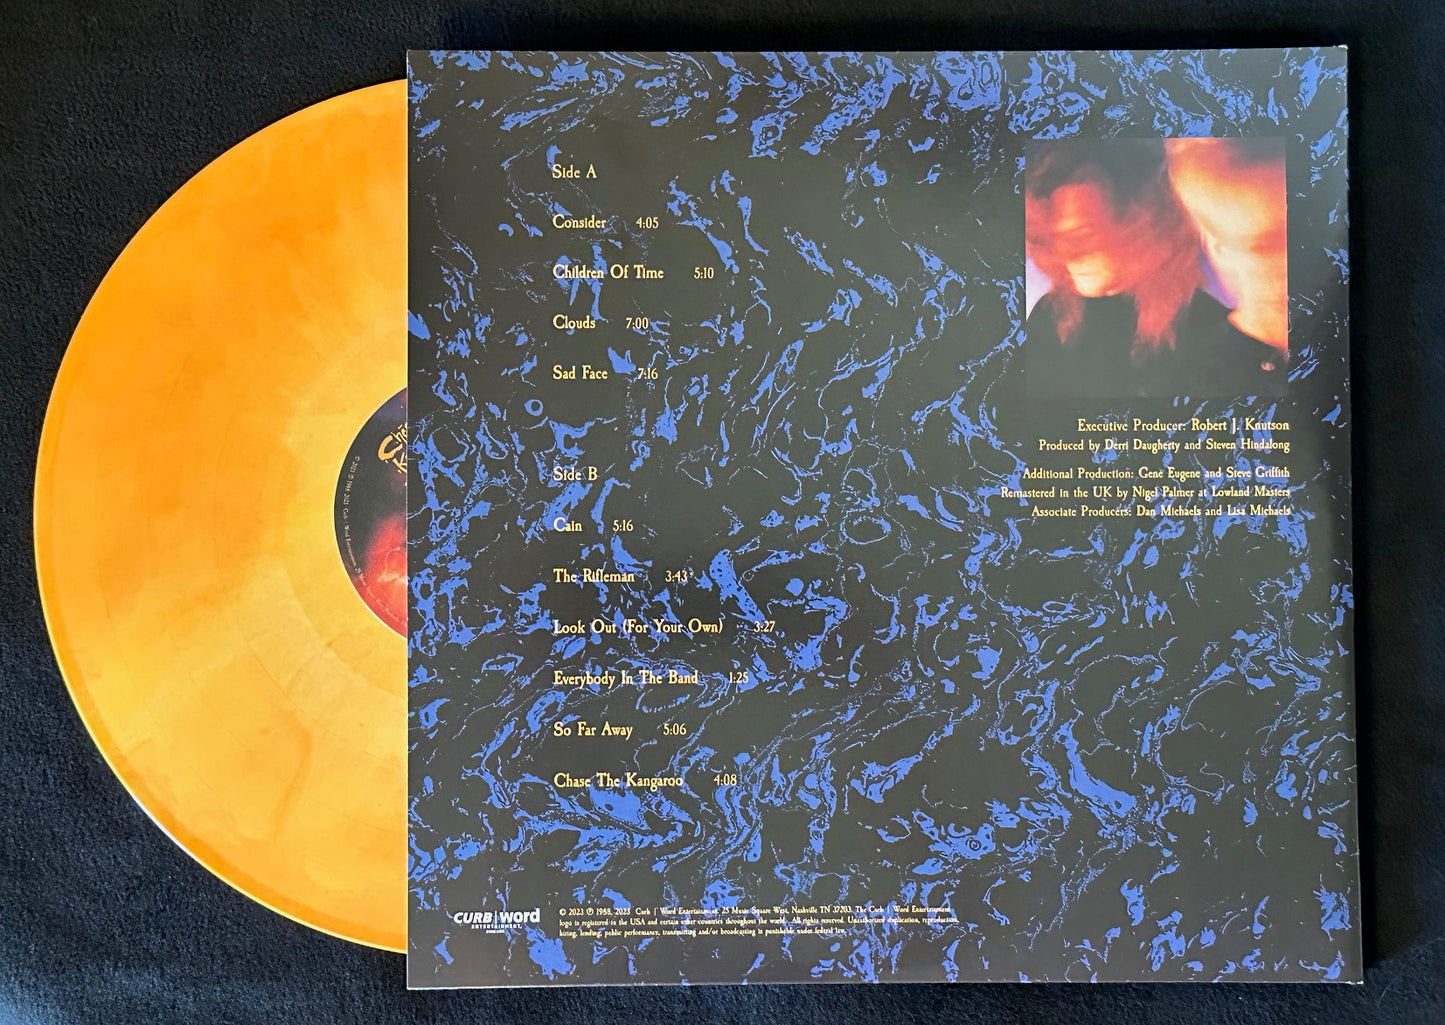 Chase The Kangaroo Remastered Vinyl - Opaque Galaxy